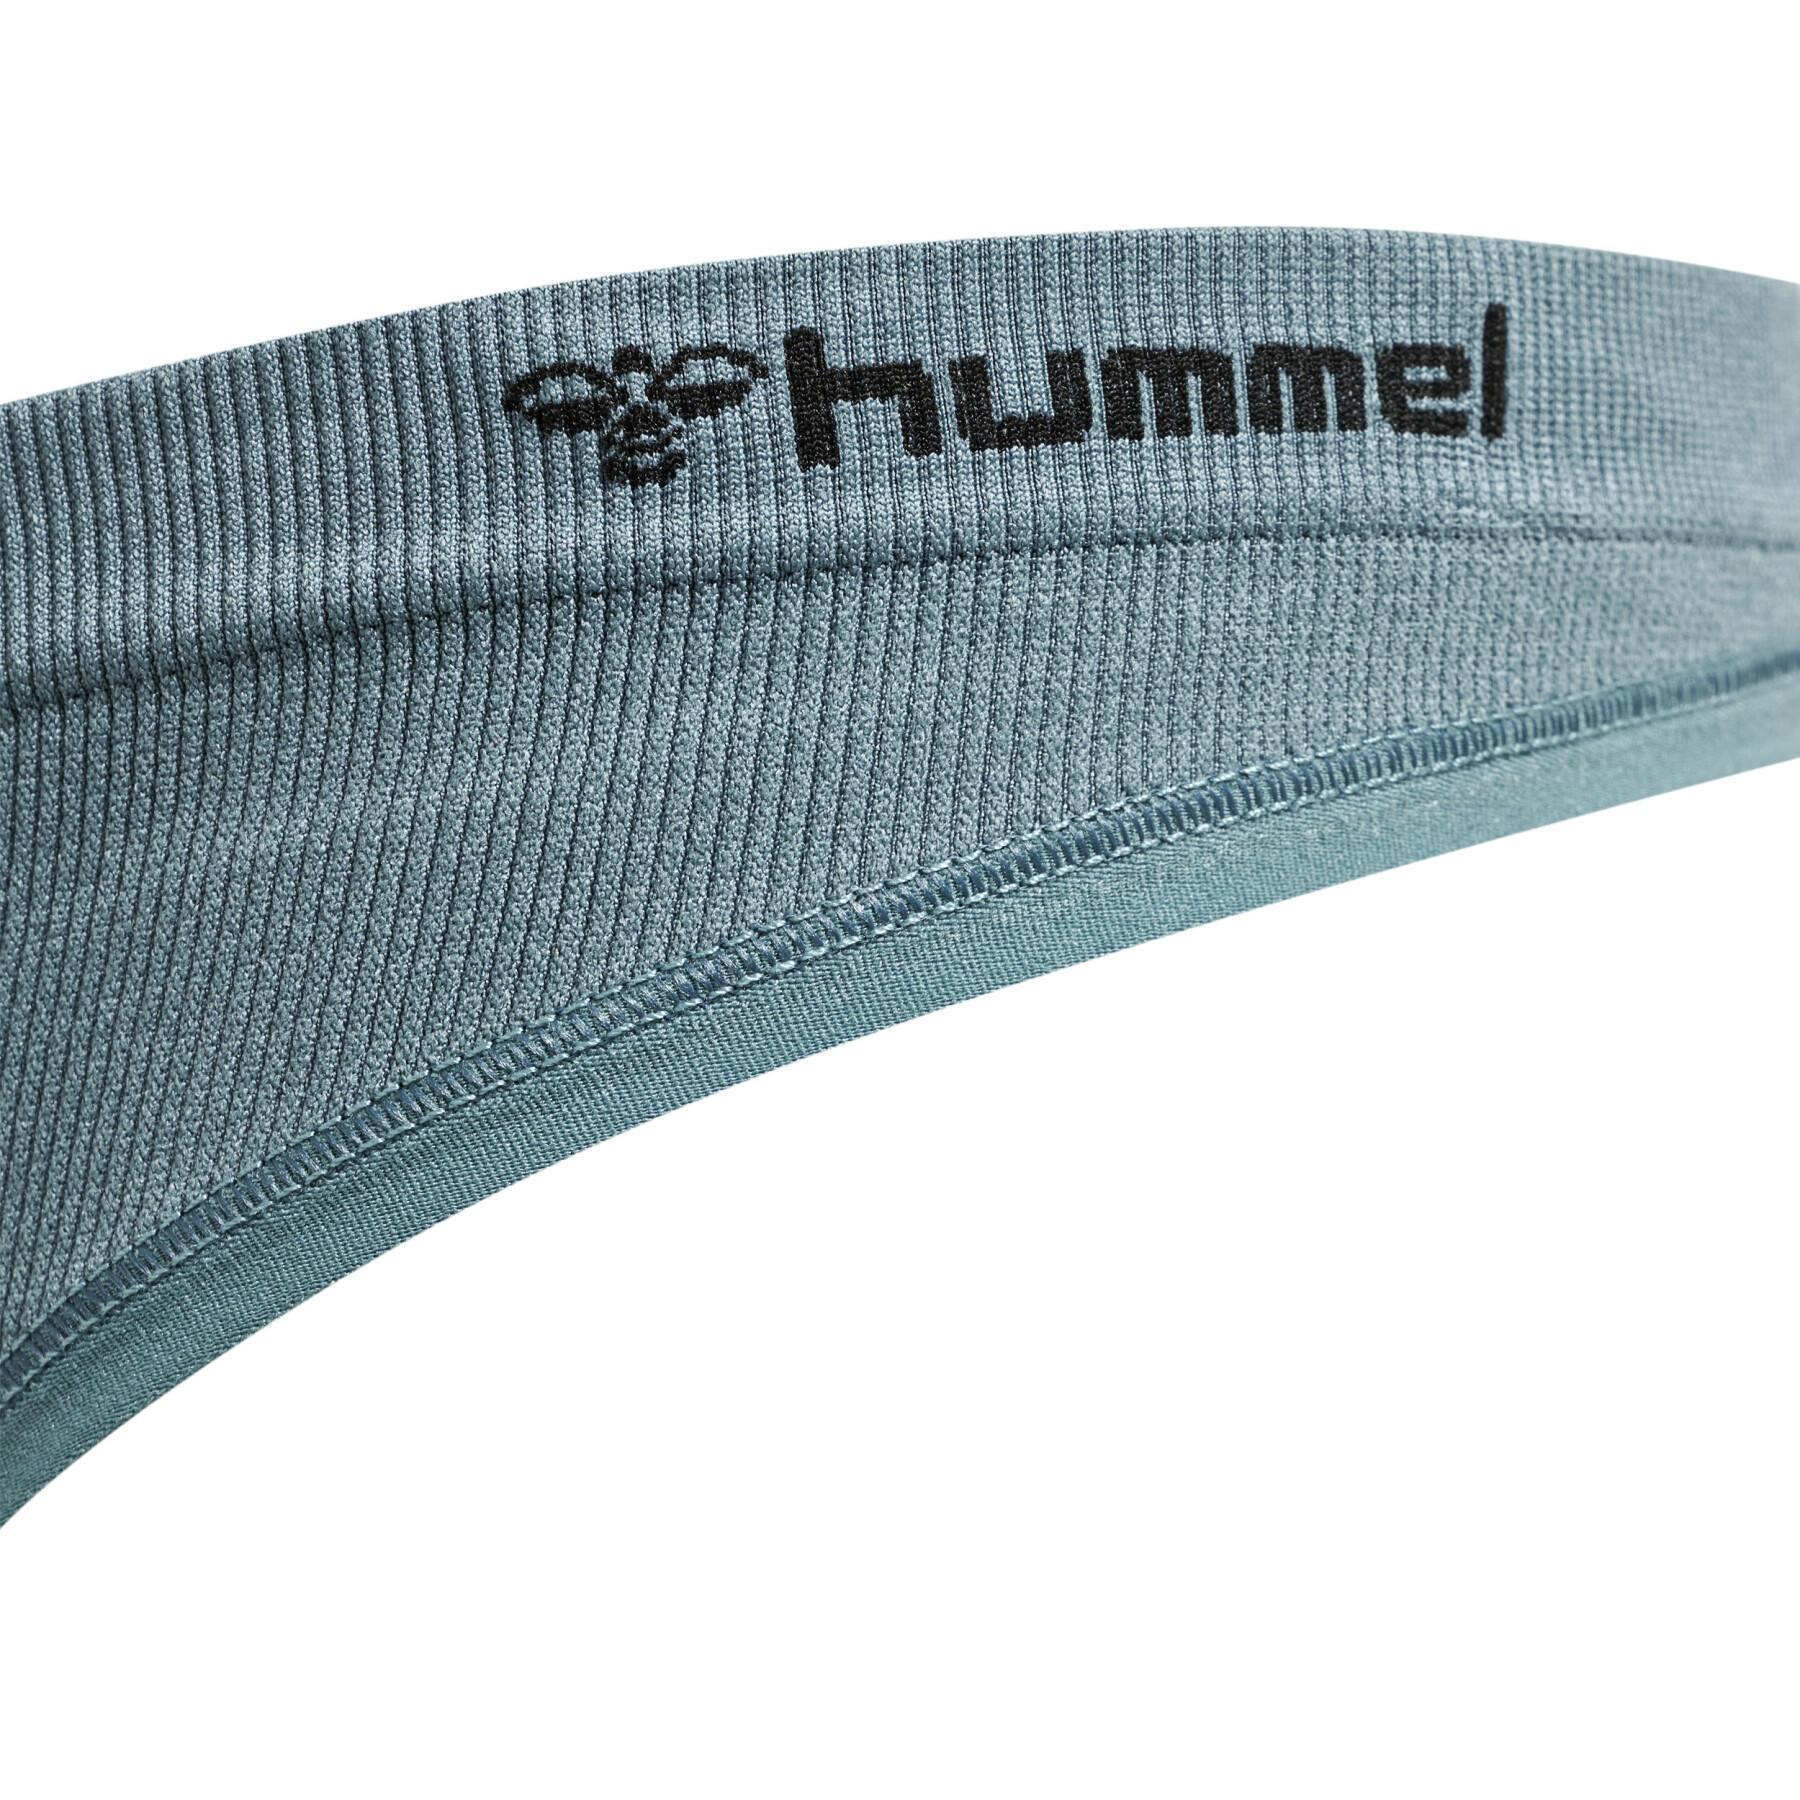 Seamless thong for women Hummel Juno